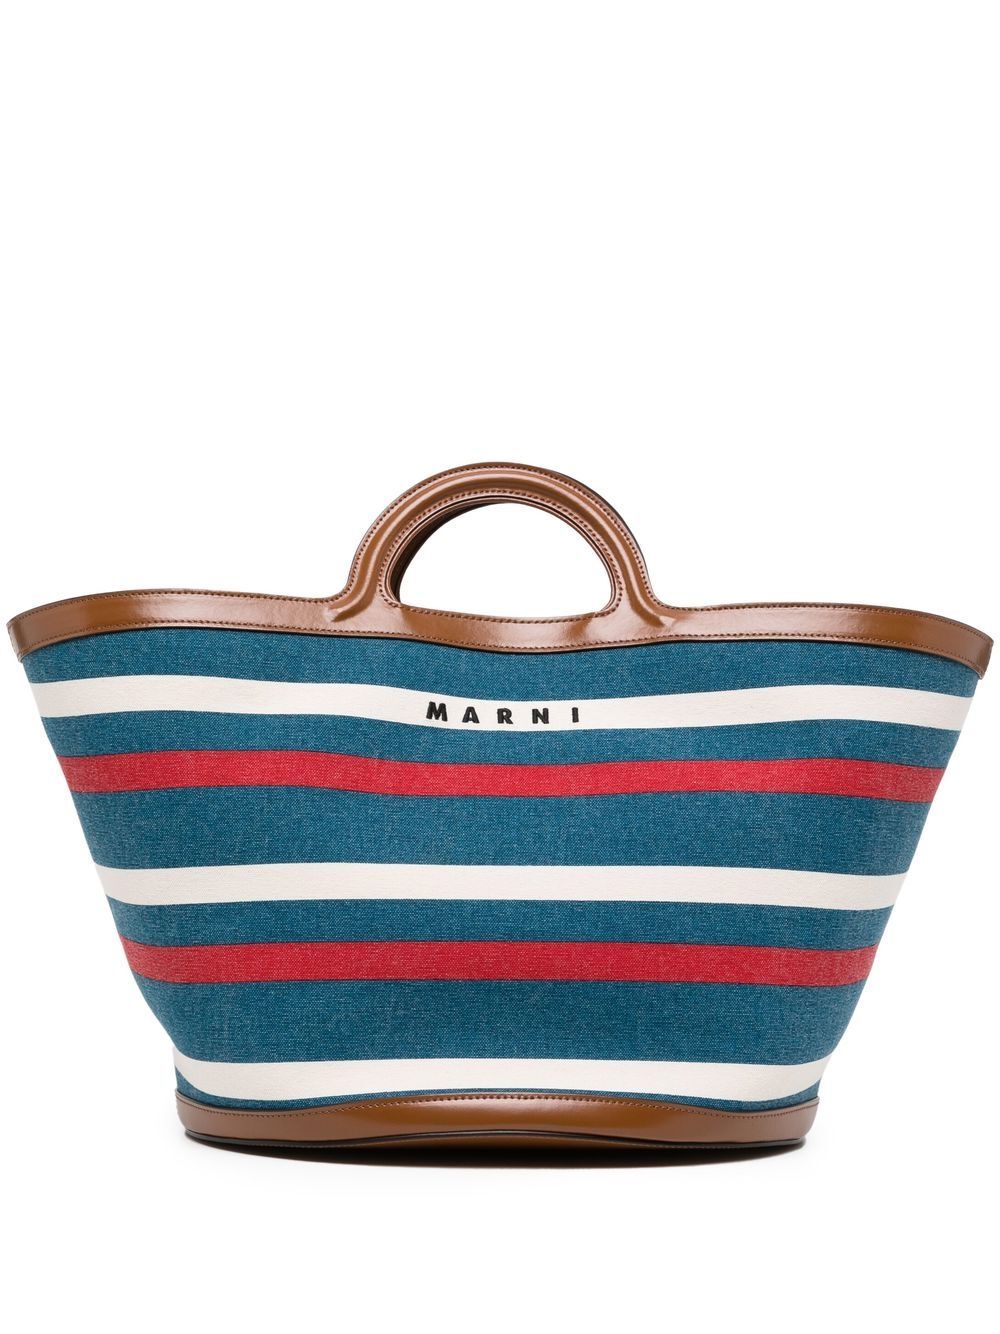 Marni striped top-handle tote bag - Blue